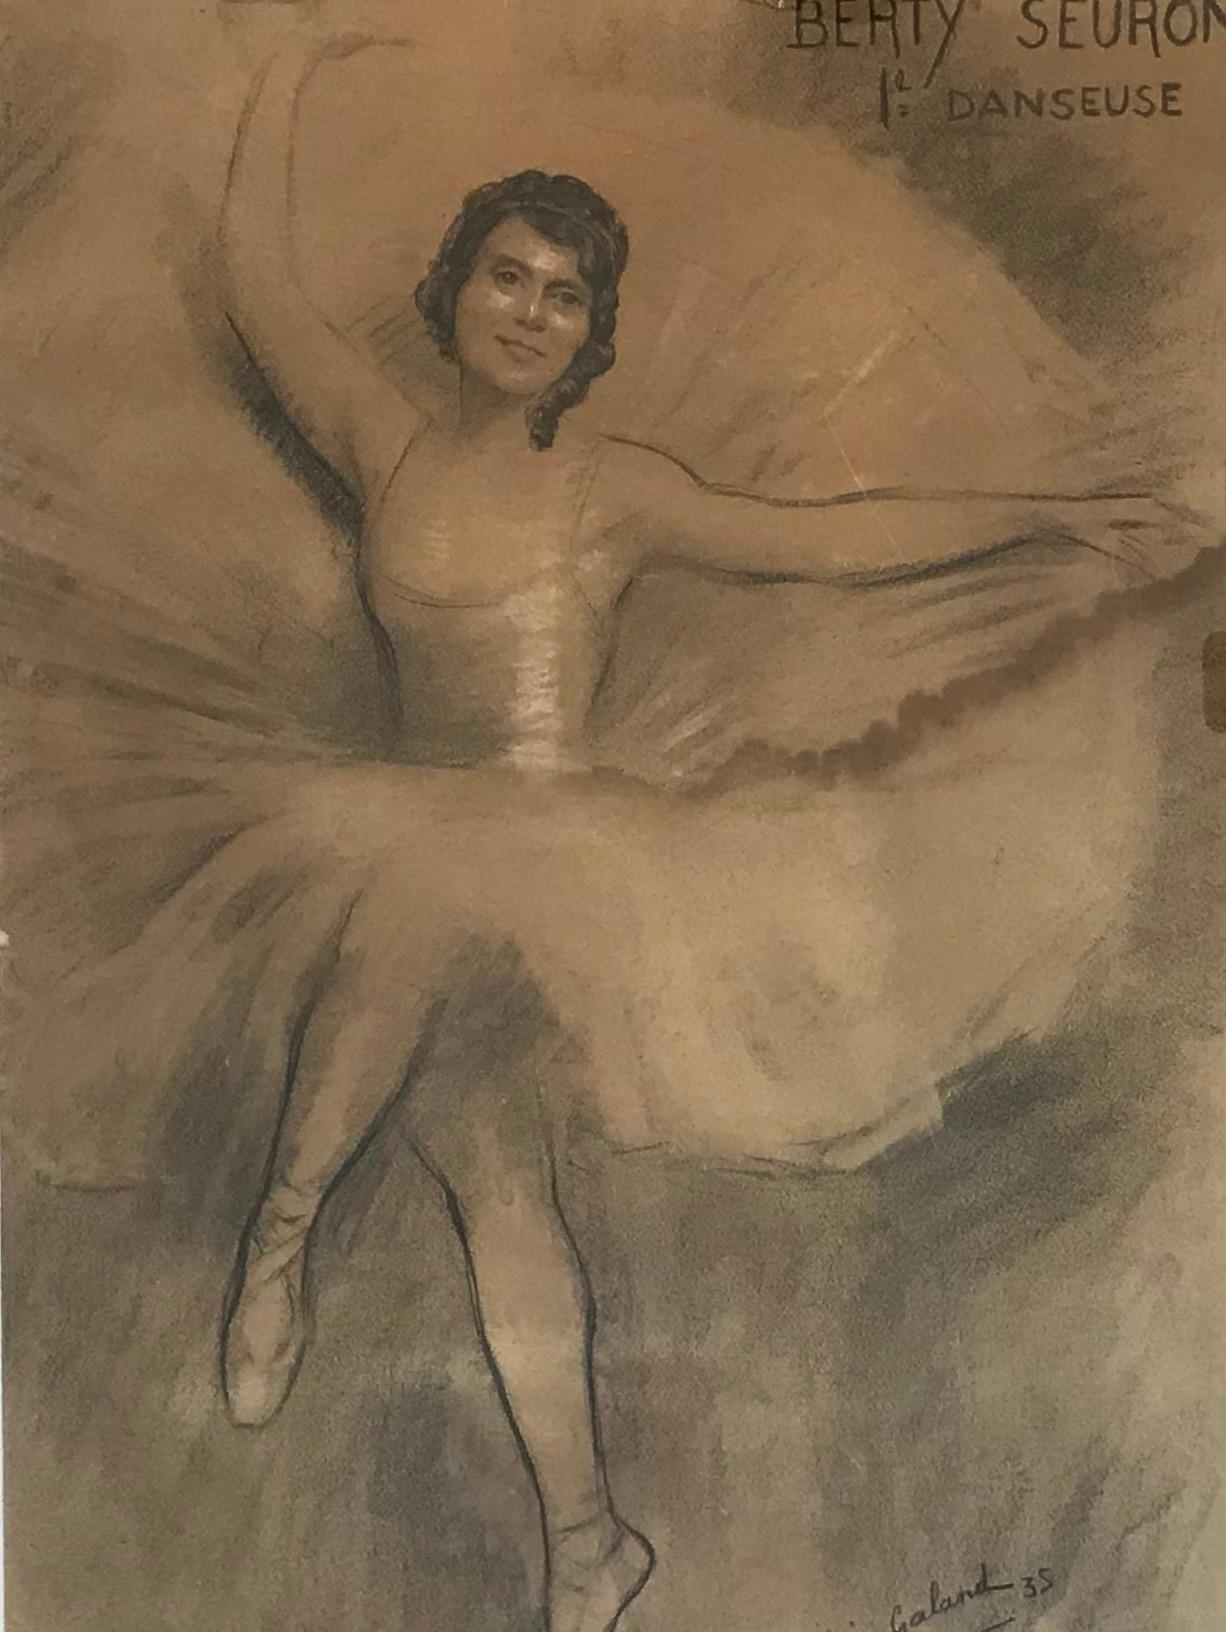 Berty Seuron 1st dancer by Leon-Laurent Galand - Drawing 43x57 cm